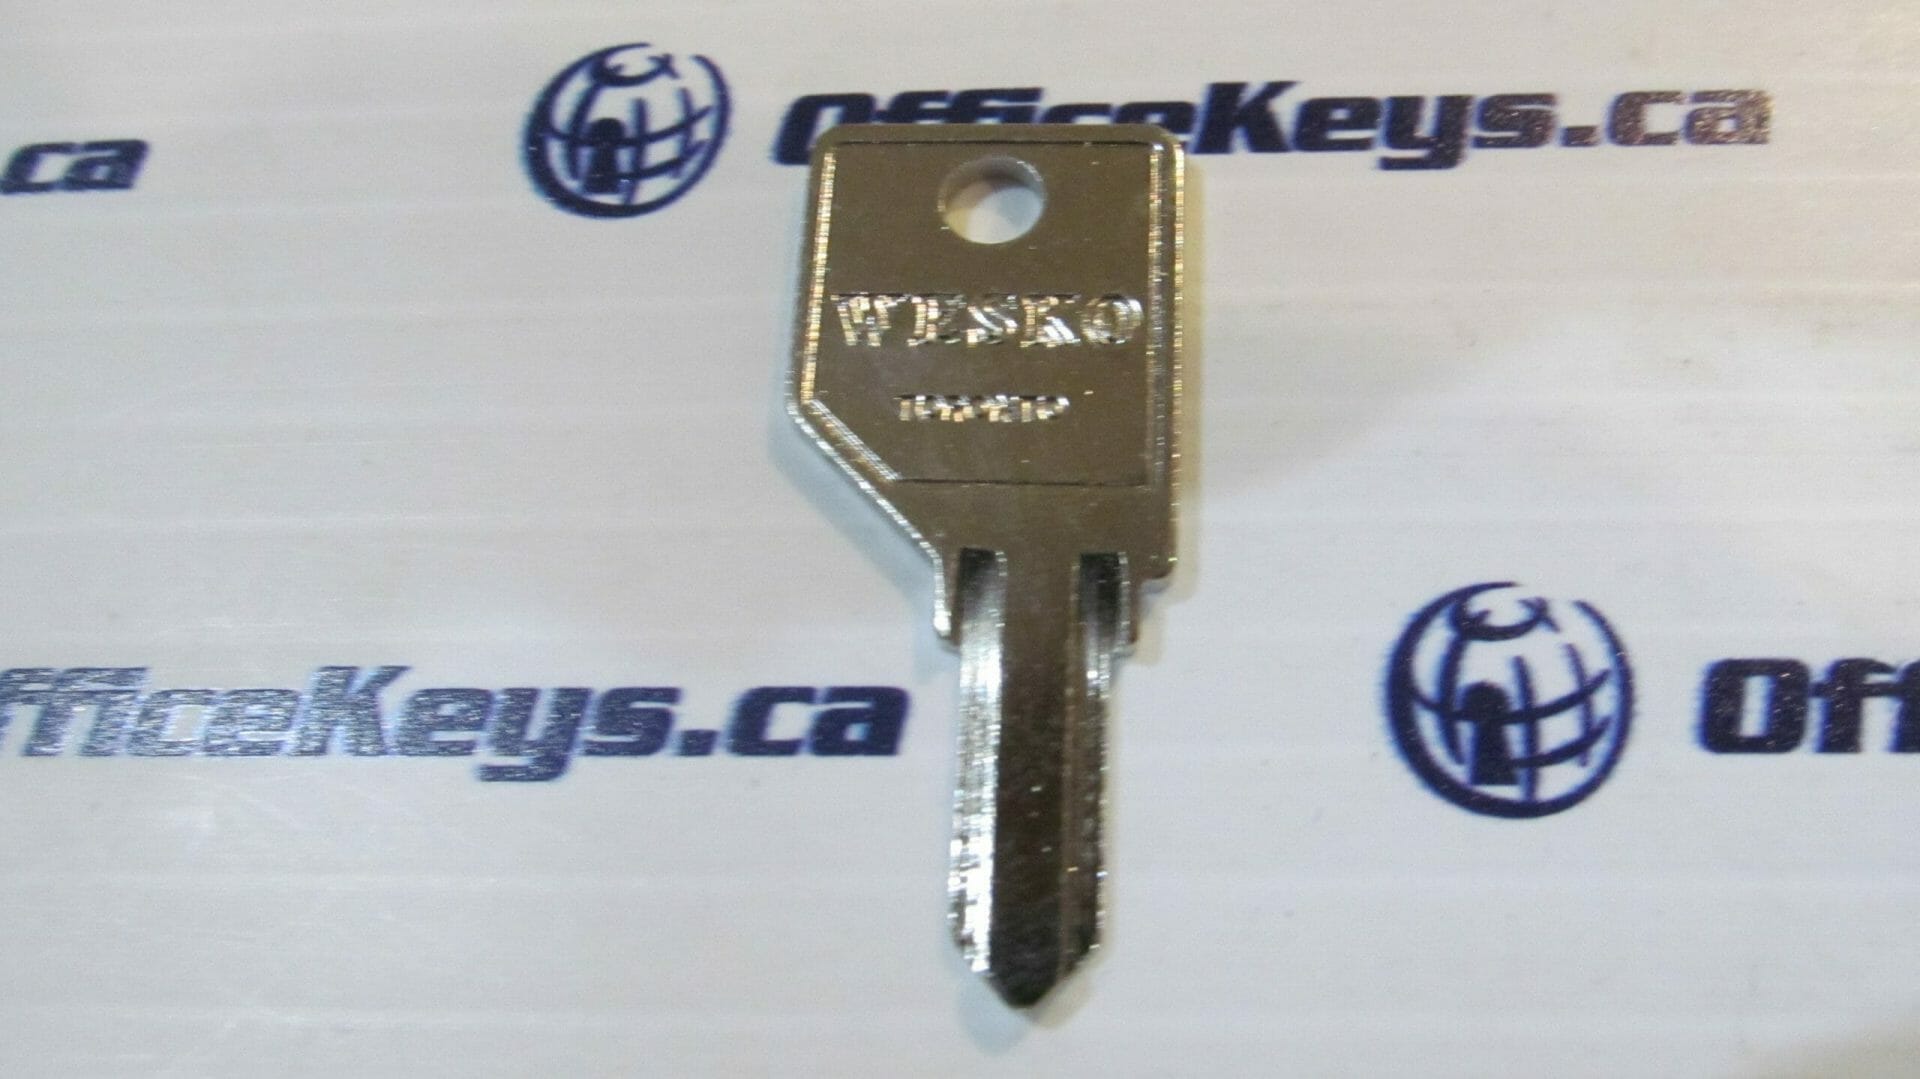 Wesko Lock Keys 